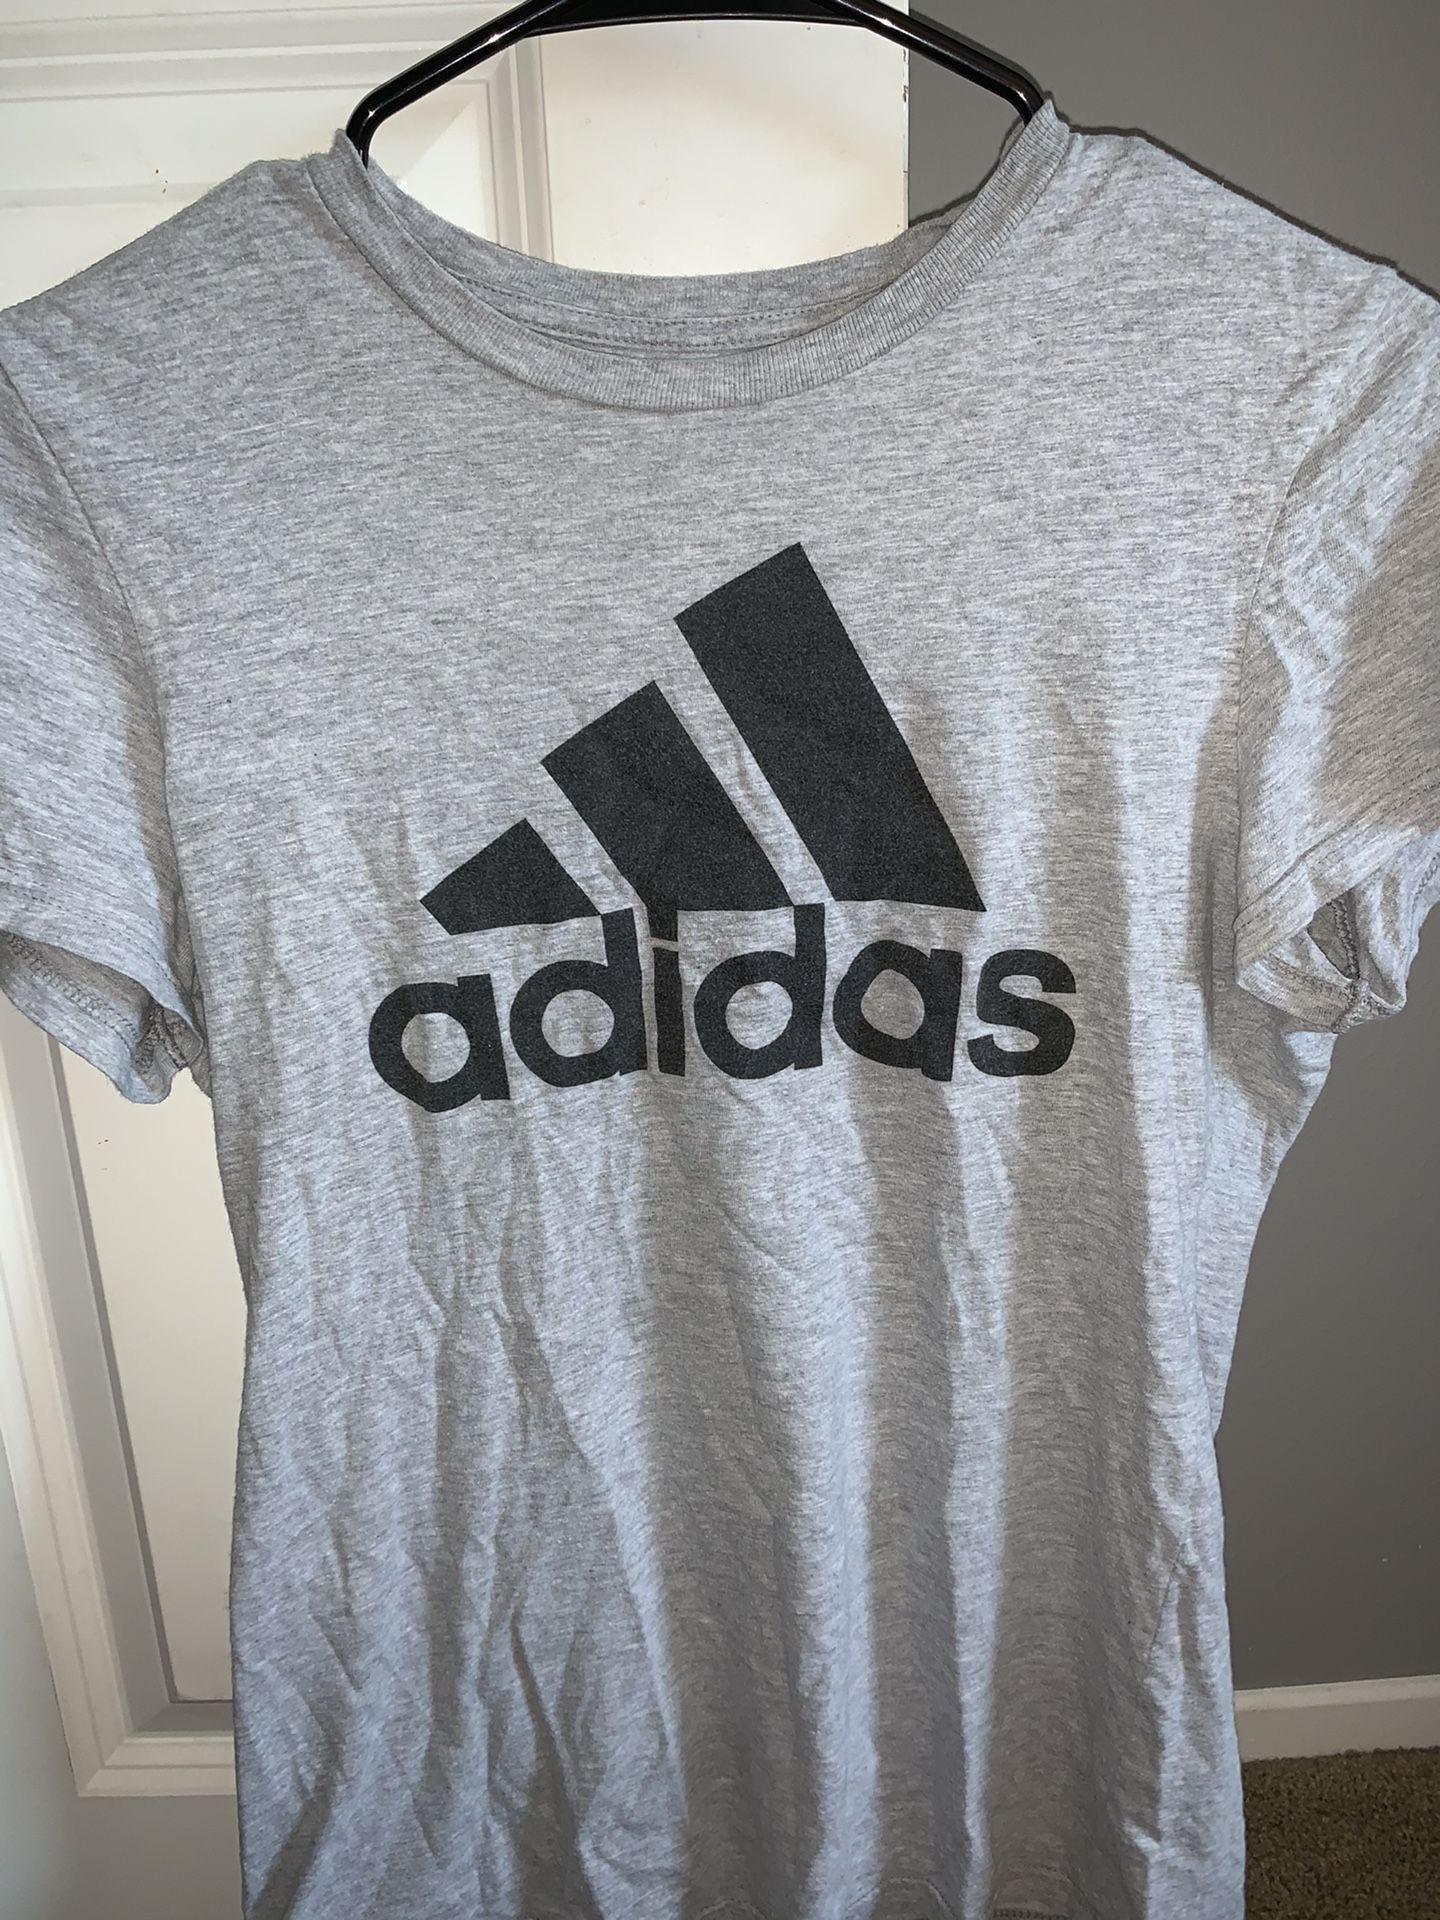 Adidas gray shirt size small